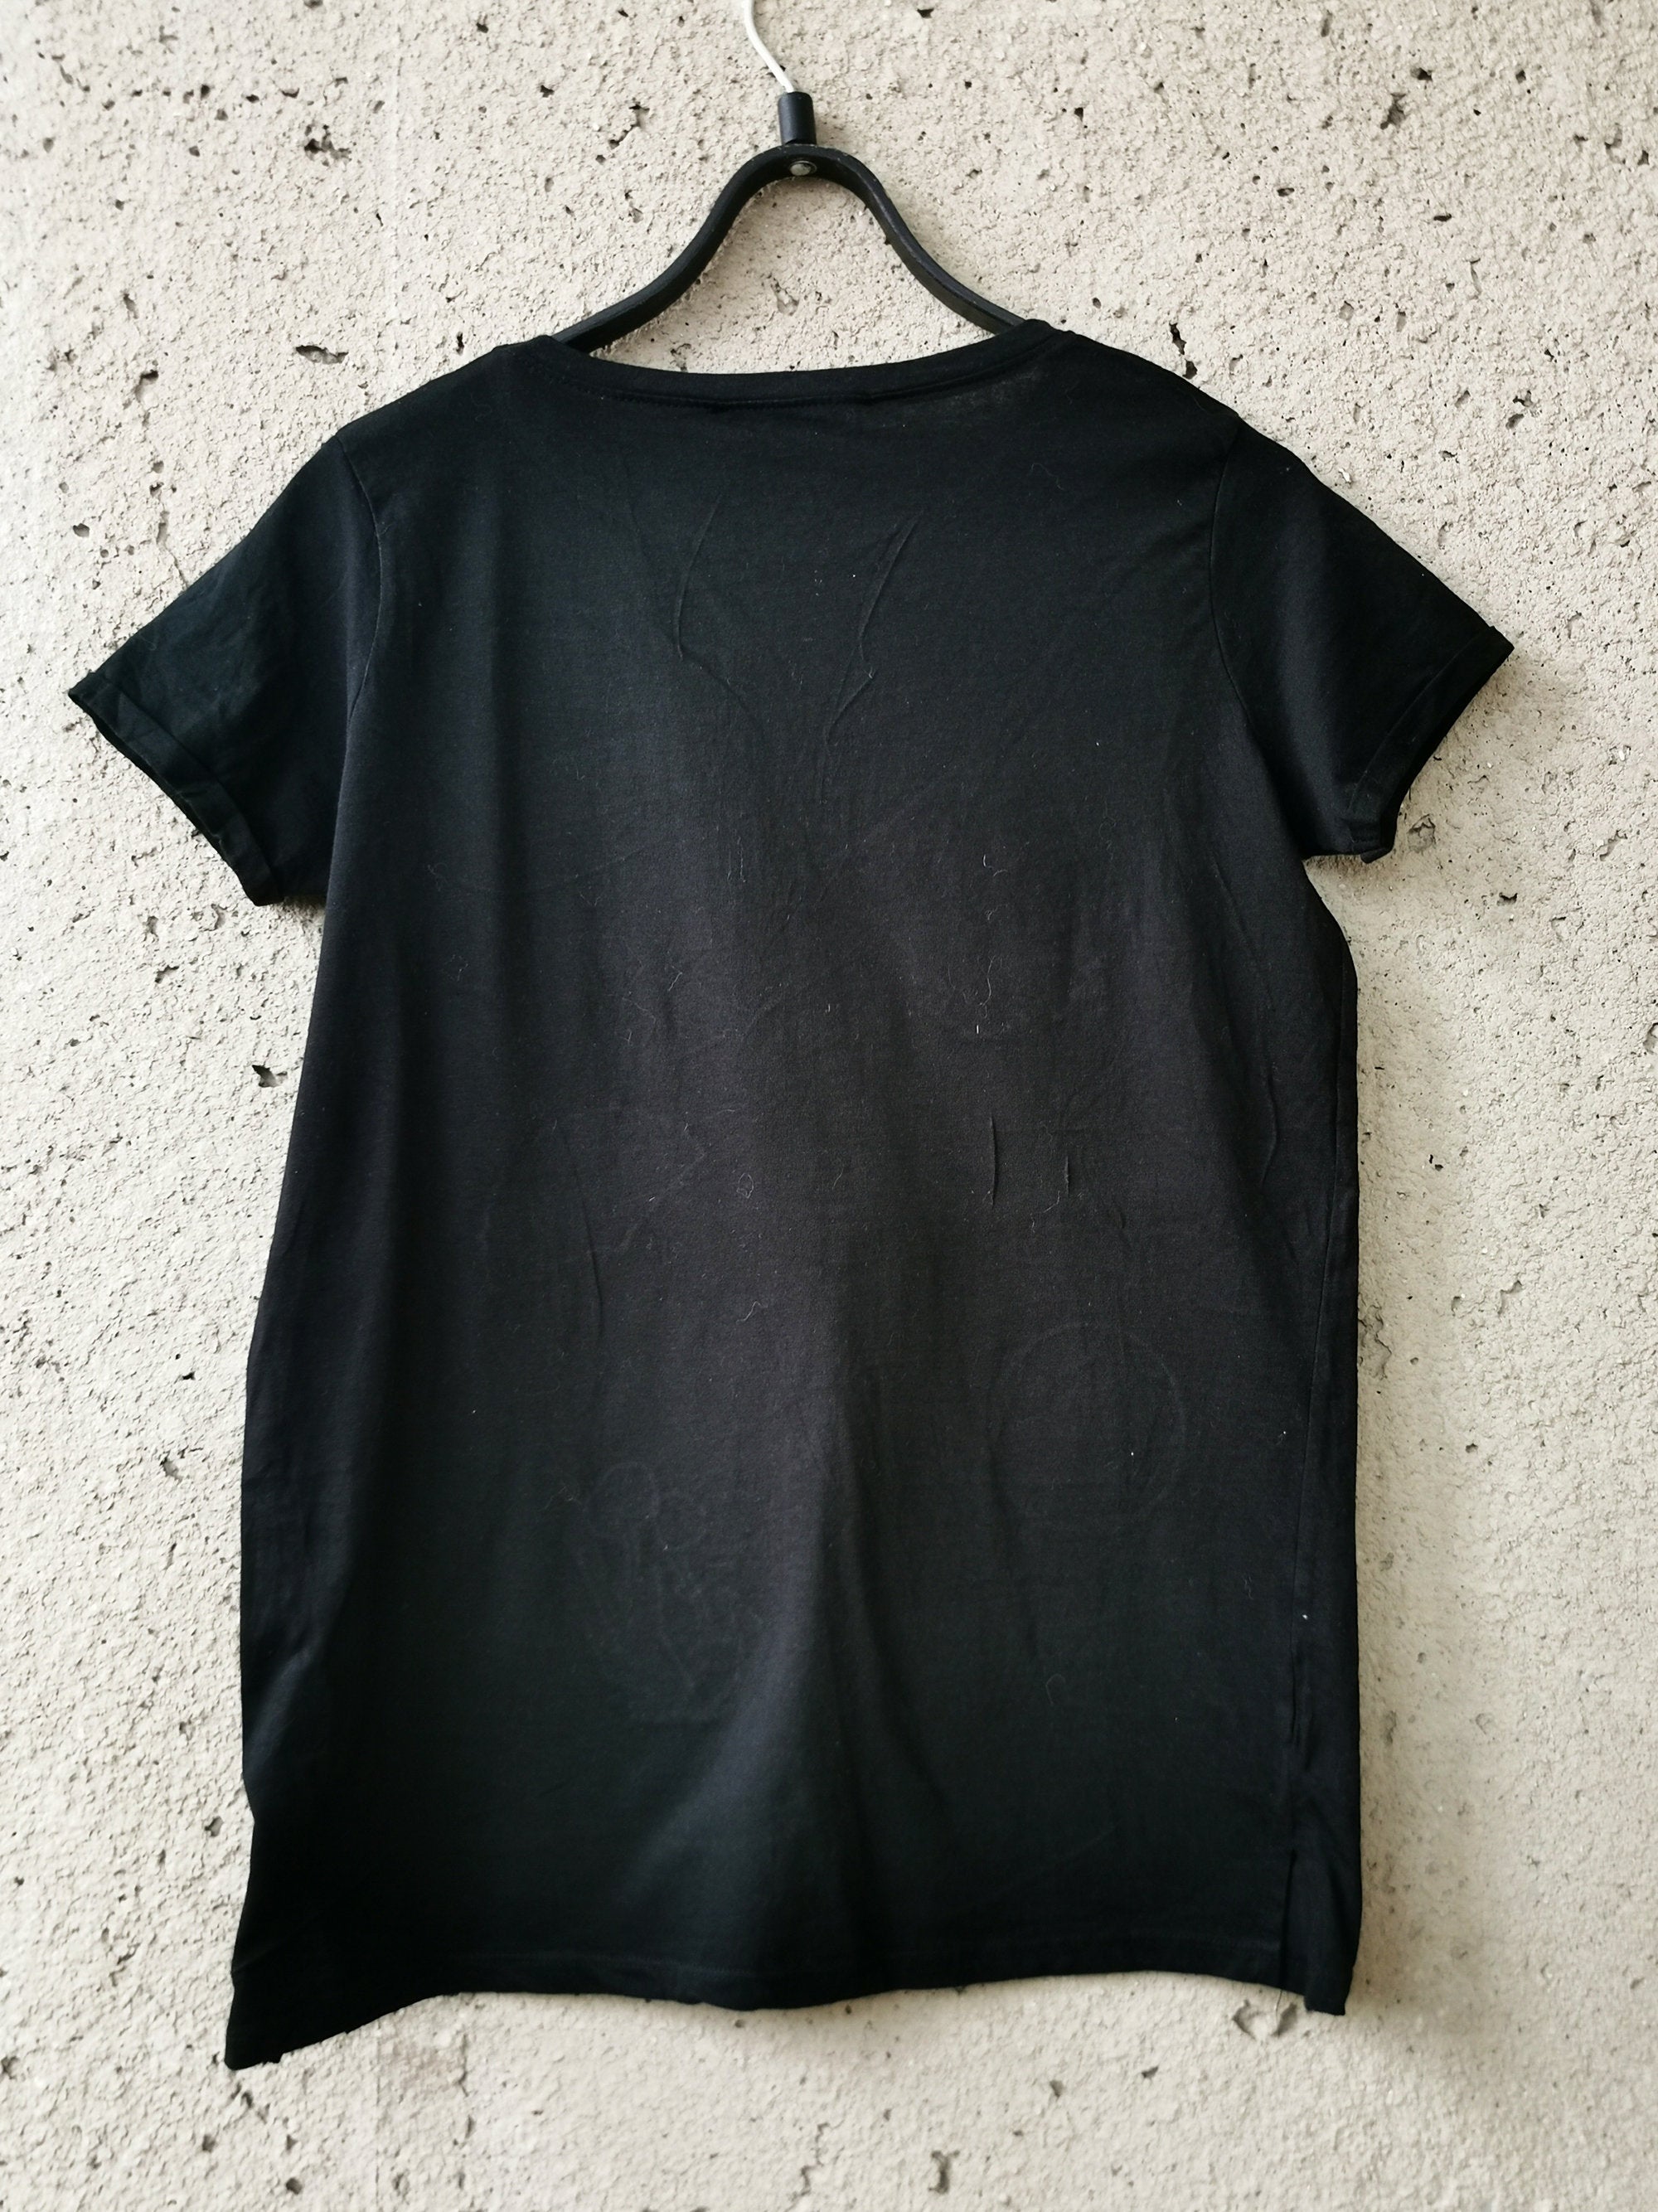 Retro Y2K Vintage grunge applique t-shirt tee in black